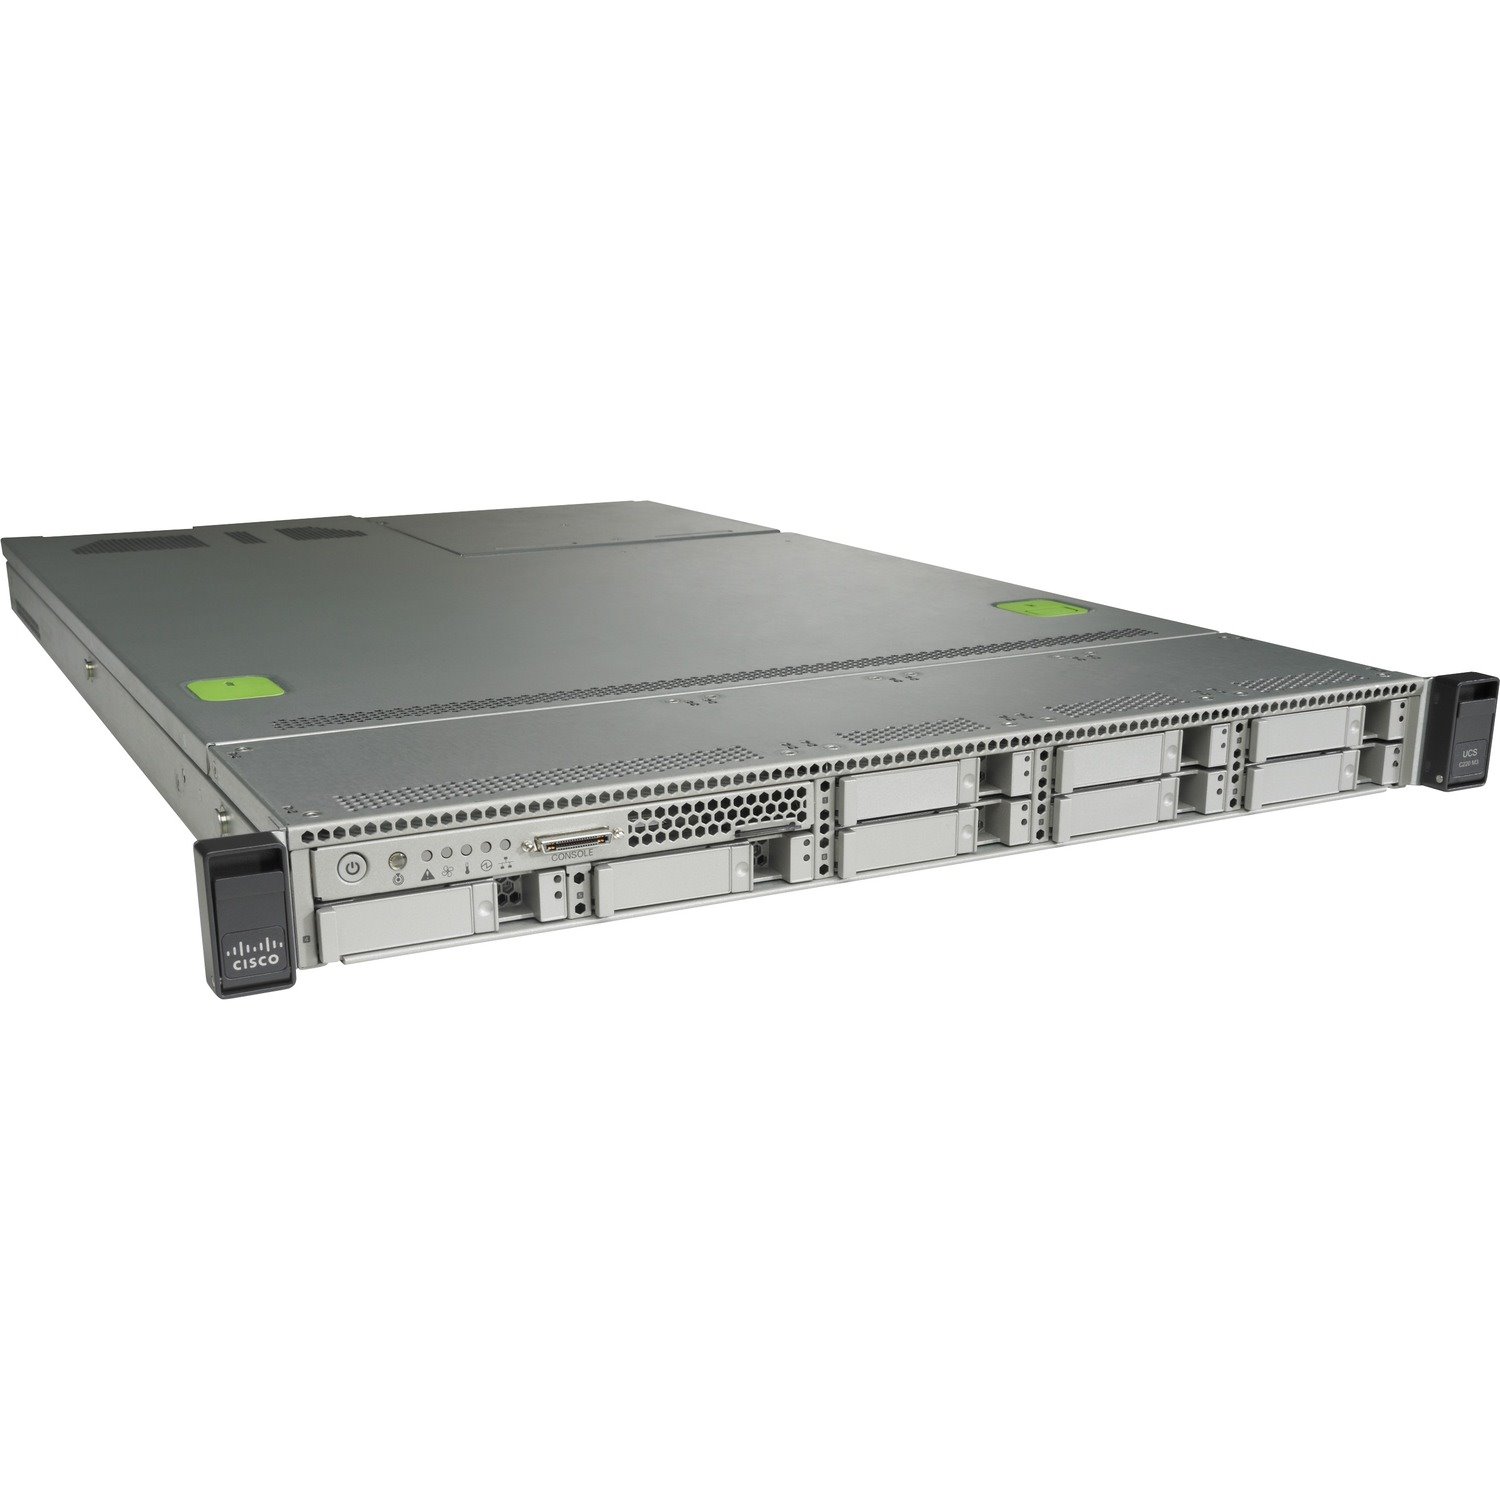 Cisco C220 M3 1U Rack Server - 1 x Intel Xeon E5-2609 2.40 GHz - 8 GB RAM - Refurbished